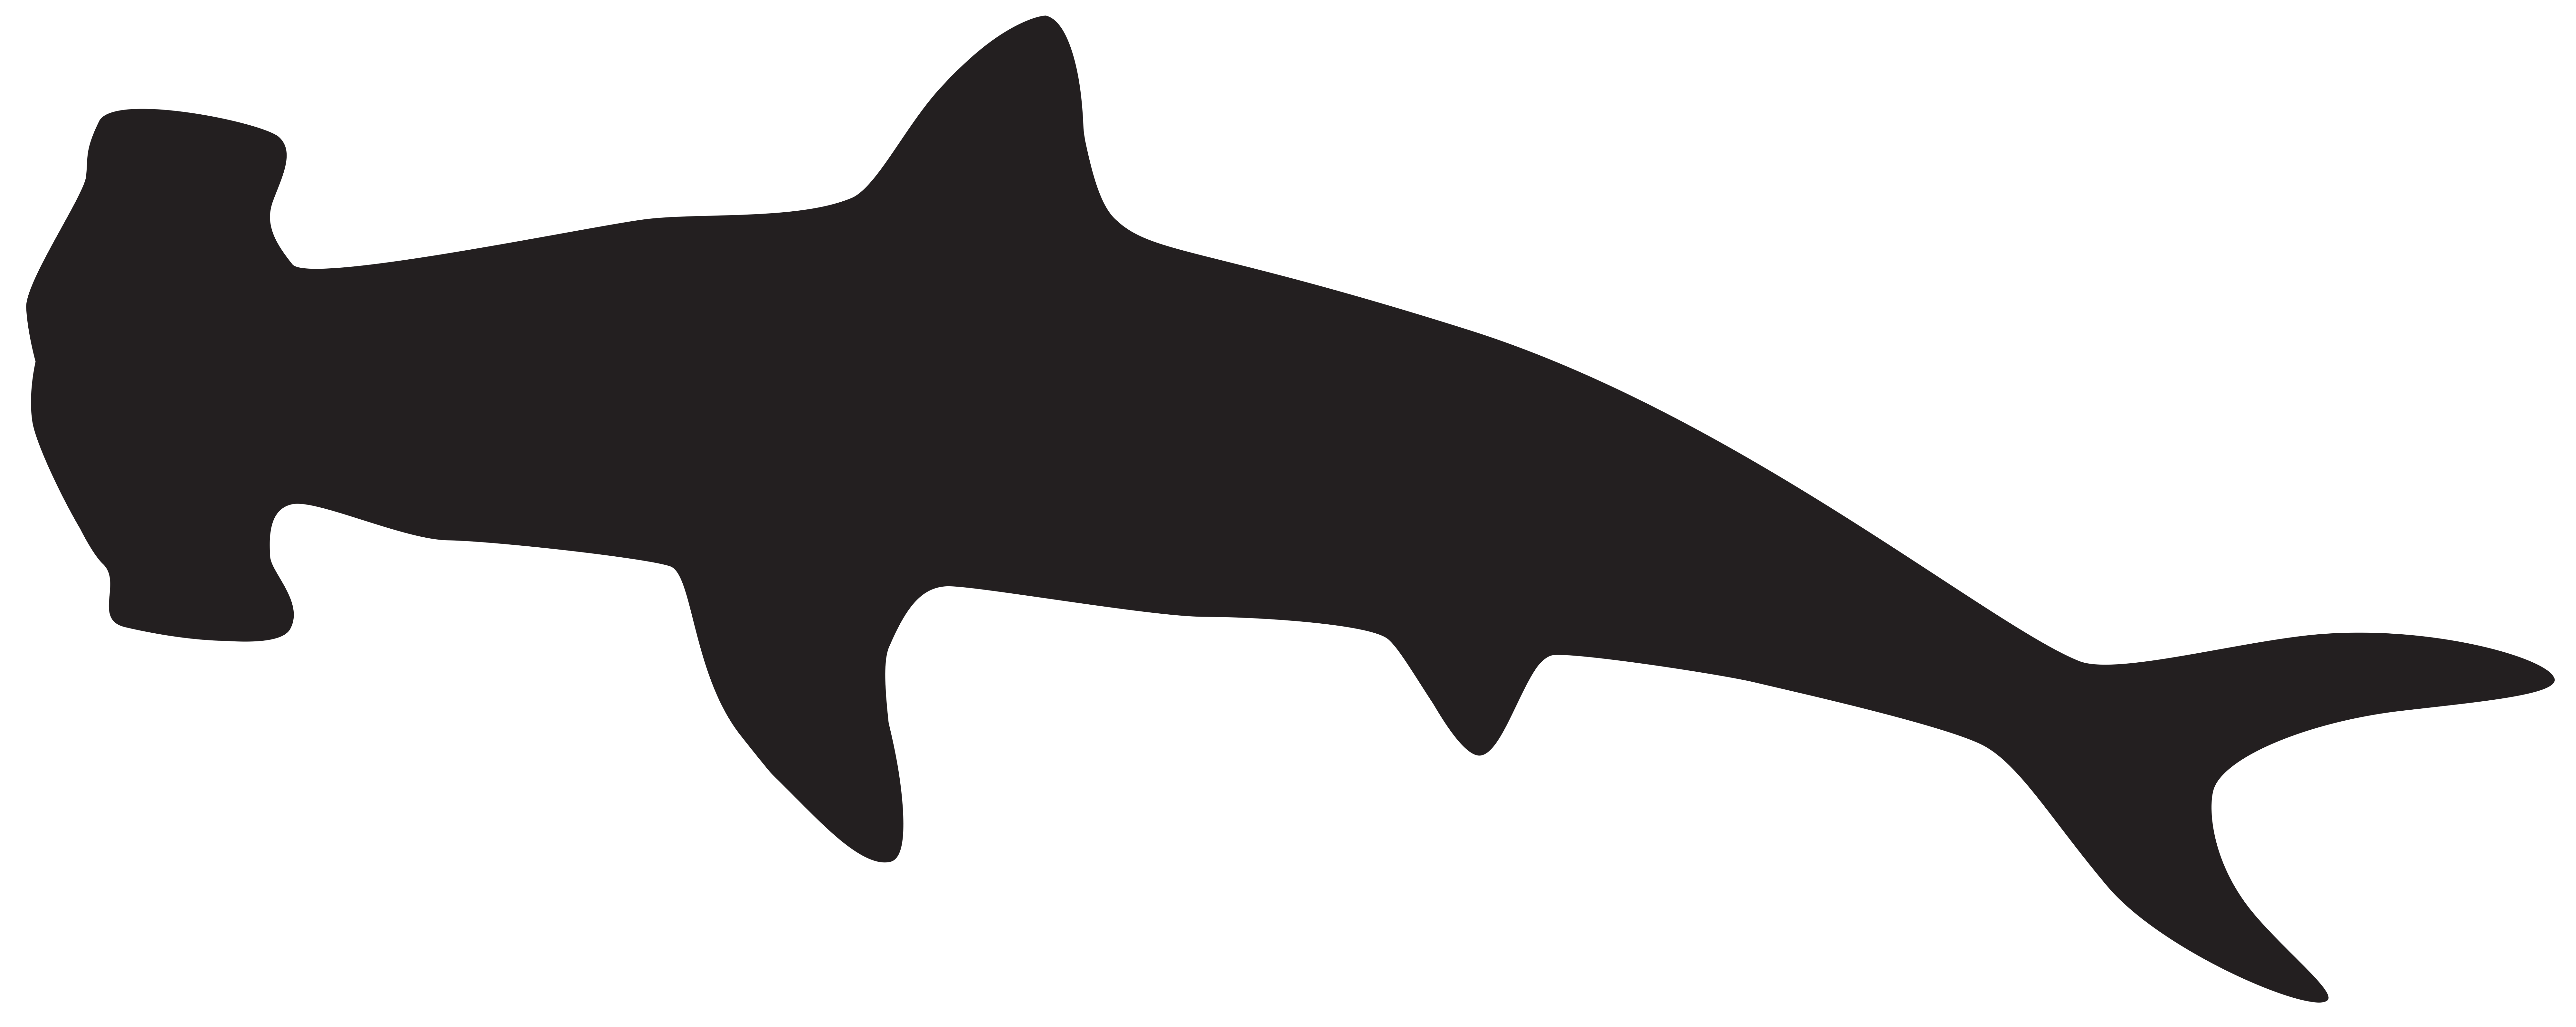 Hammerhead Shark Silhouette PNG Clip Art Image